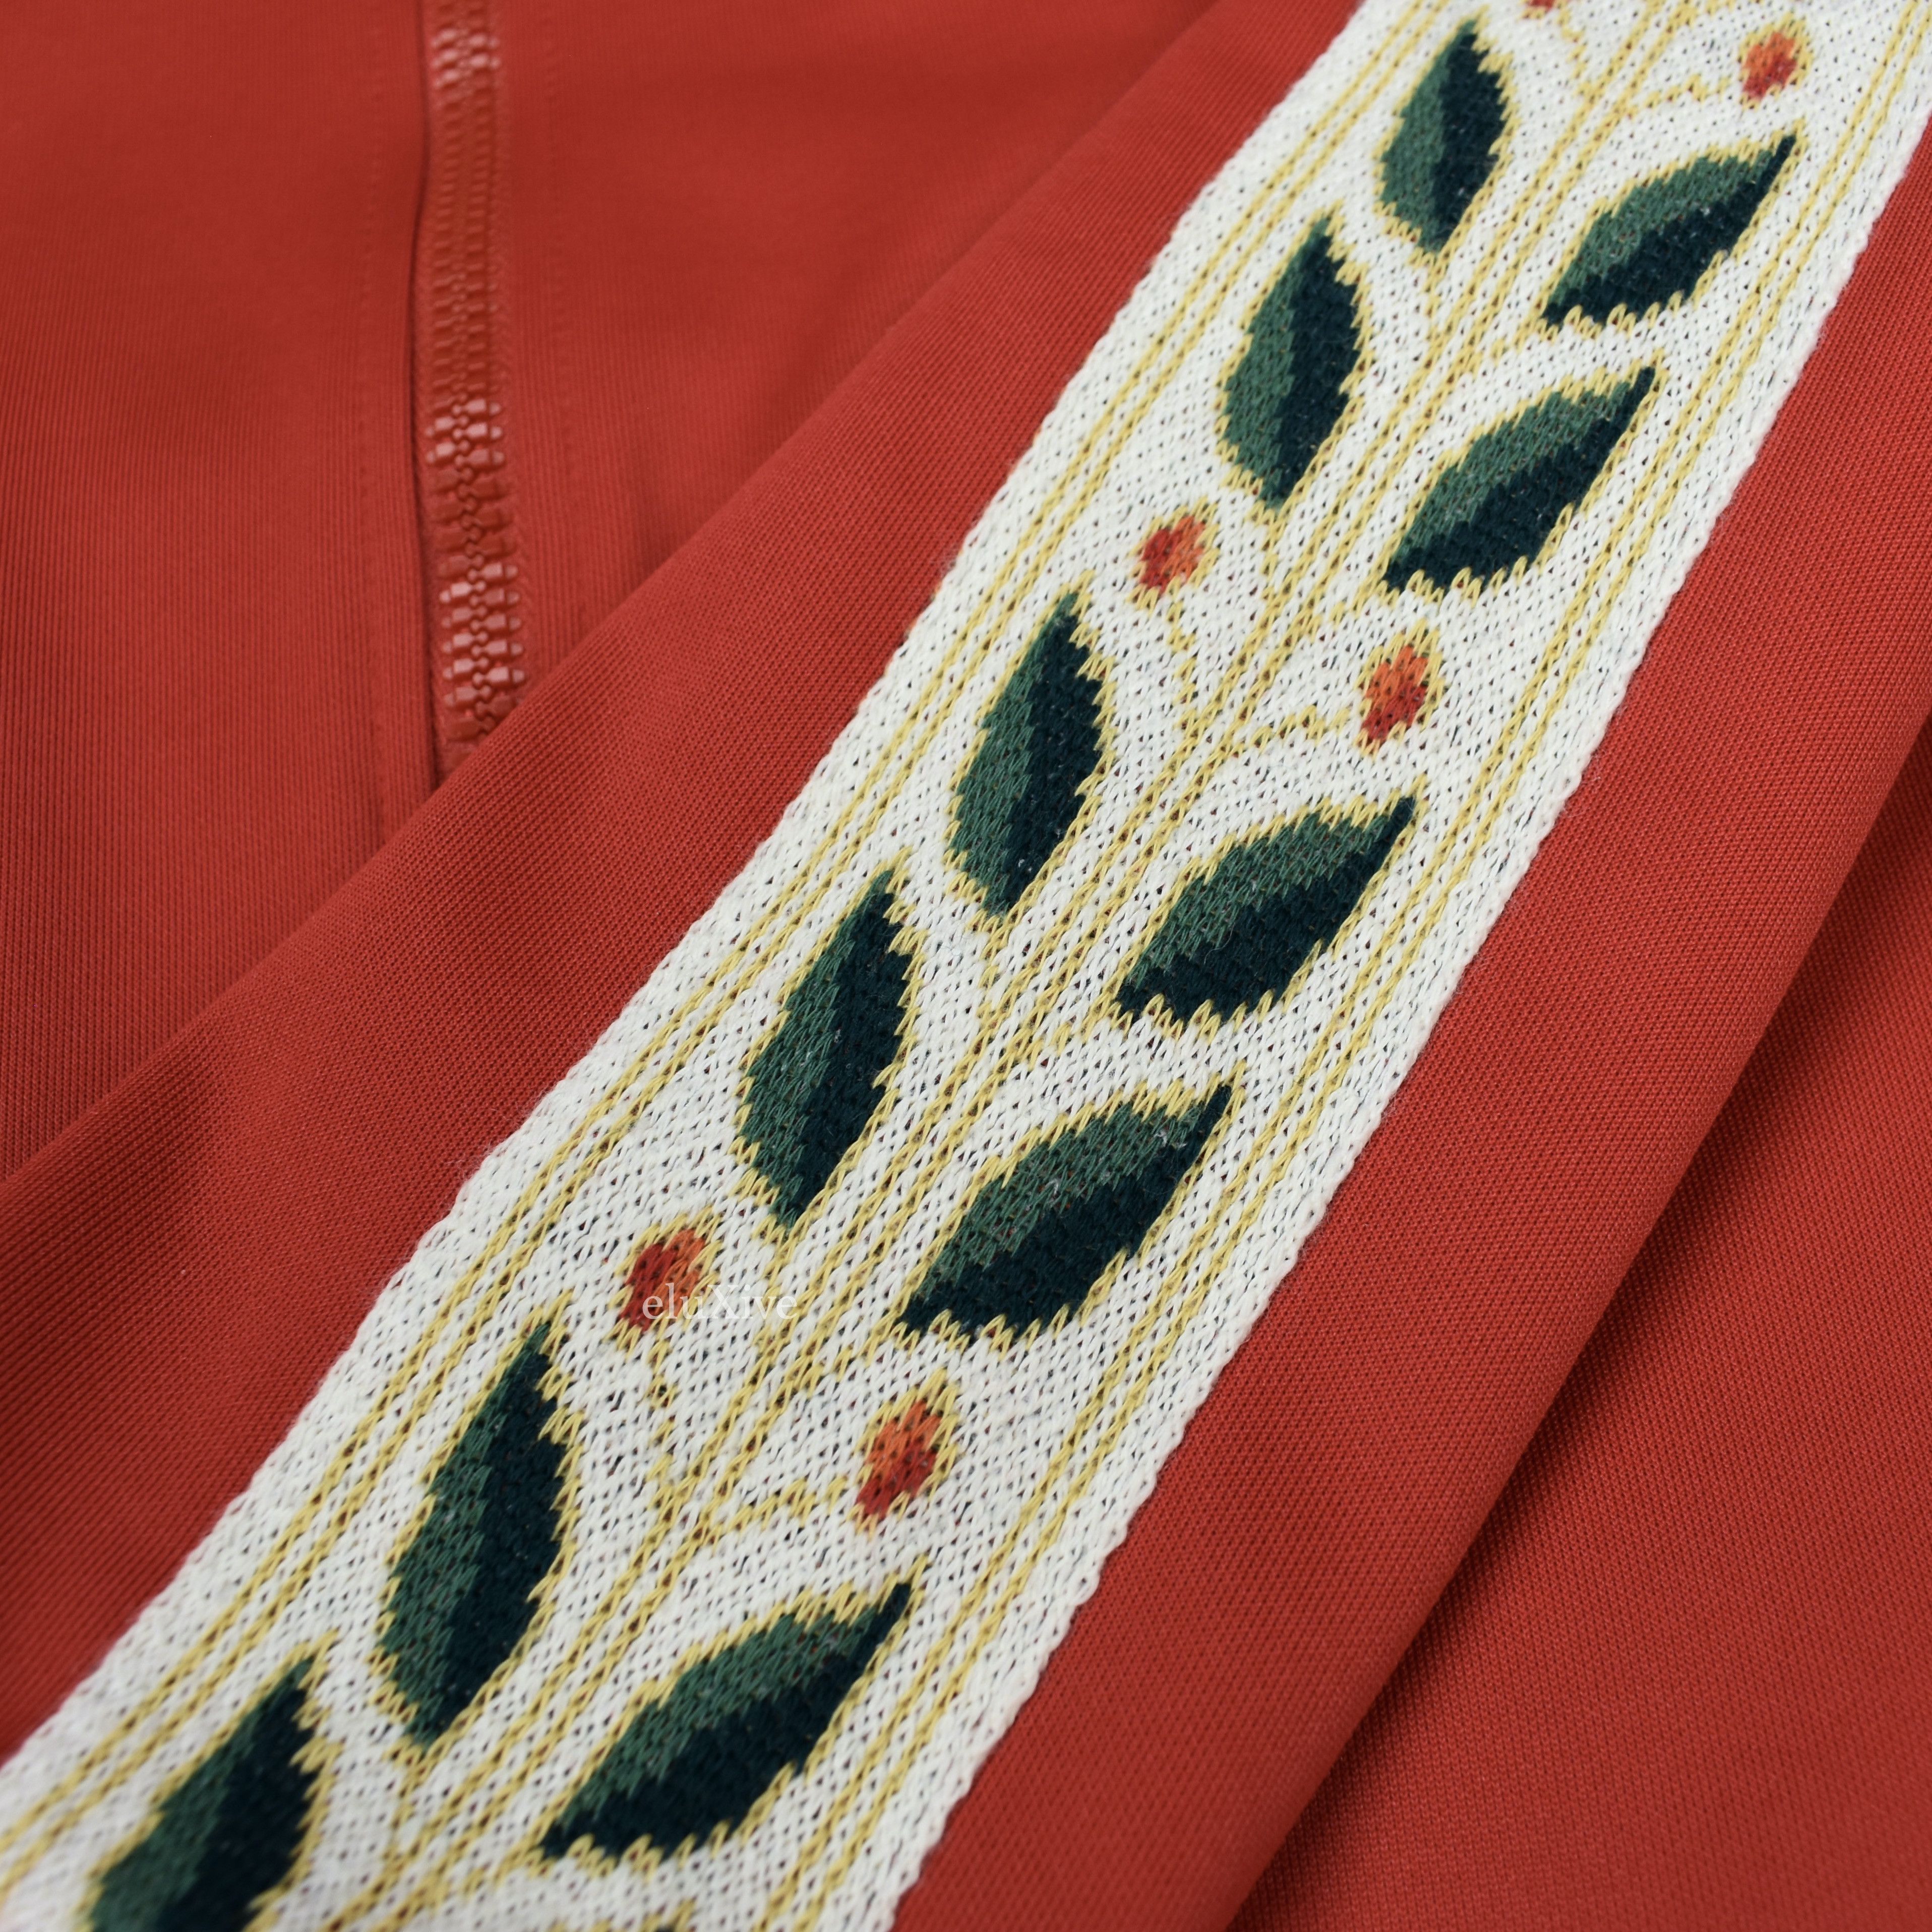 Casablanca Casablanca Red Laurel Stripe Track Jacket NWT Size US M / EU 48-50 / 2 - 4 Thumbnail